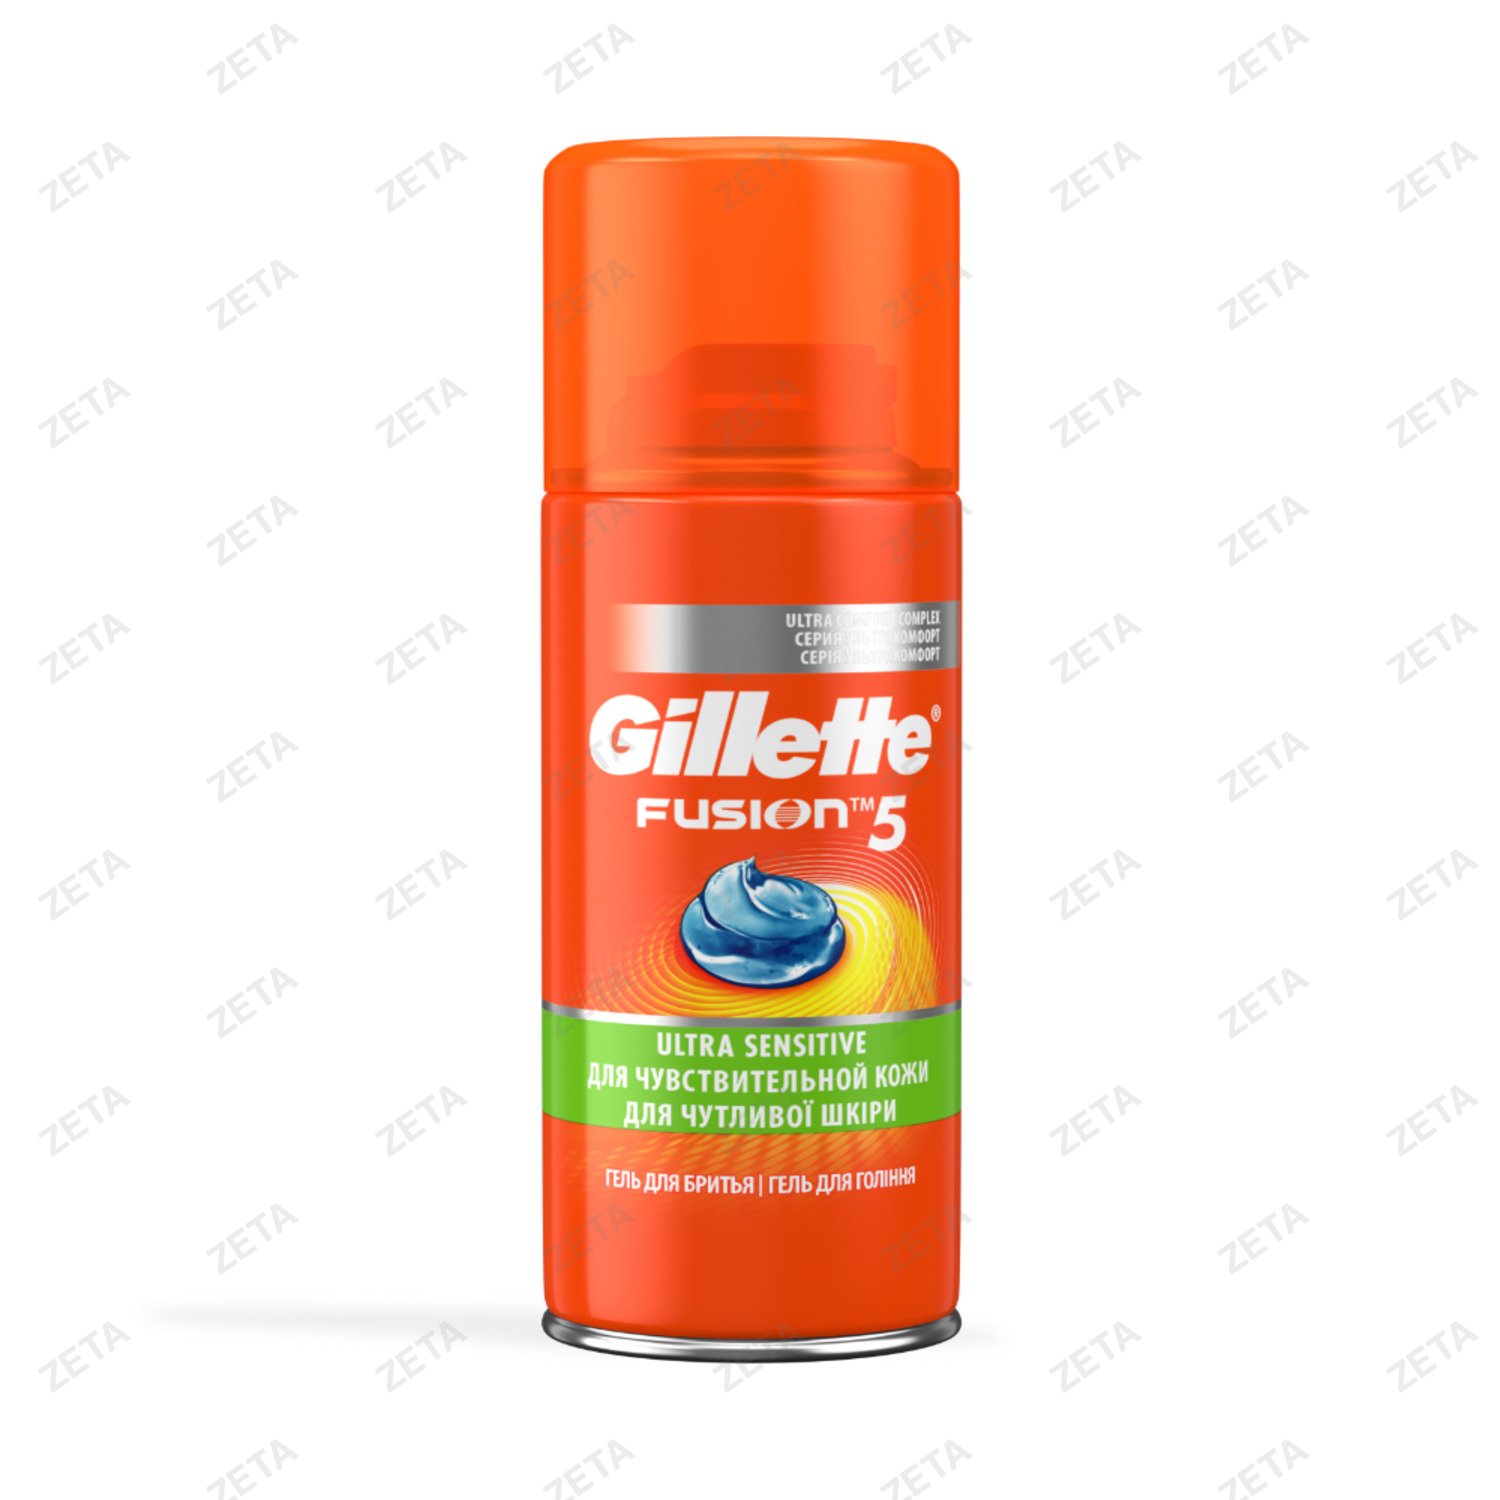 Гель для бритья "Gillette Fusion 5", 200 мл.